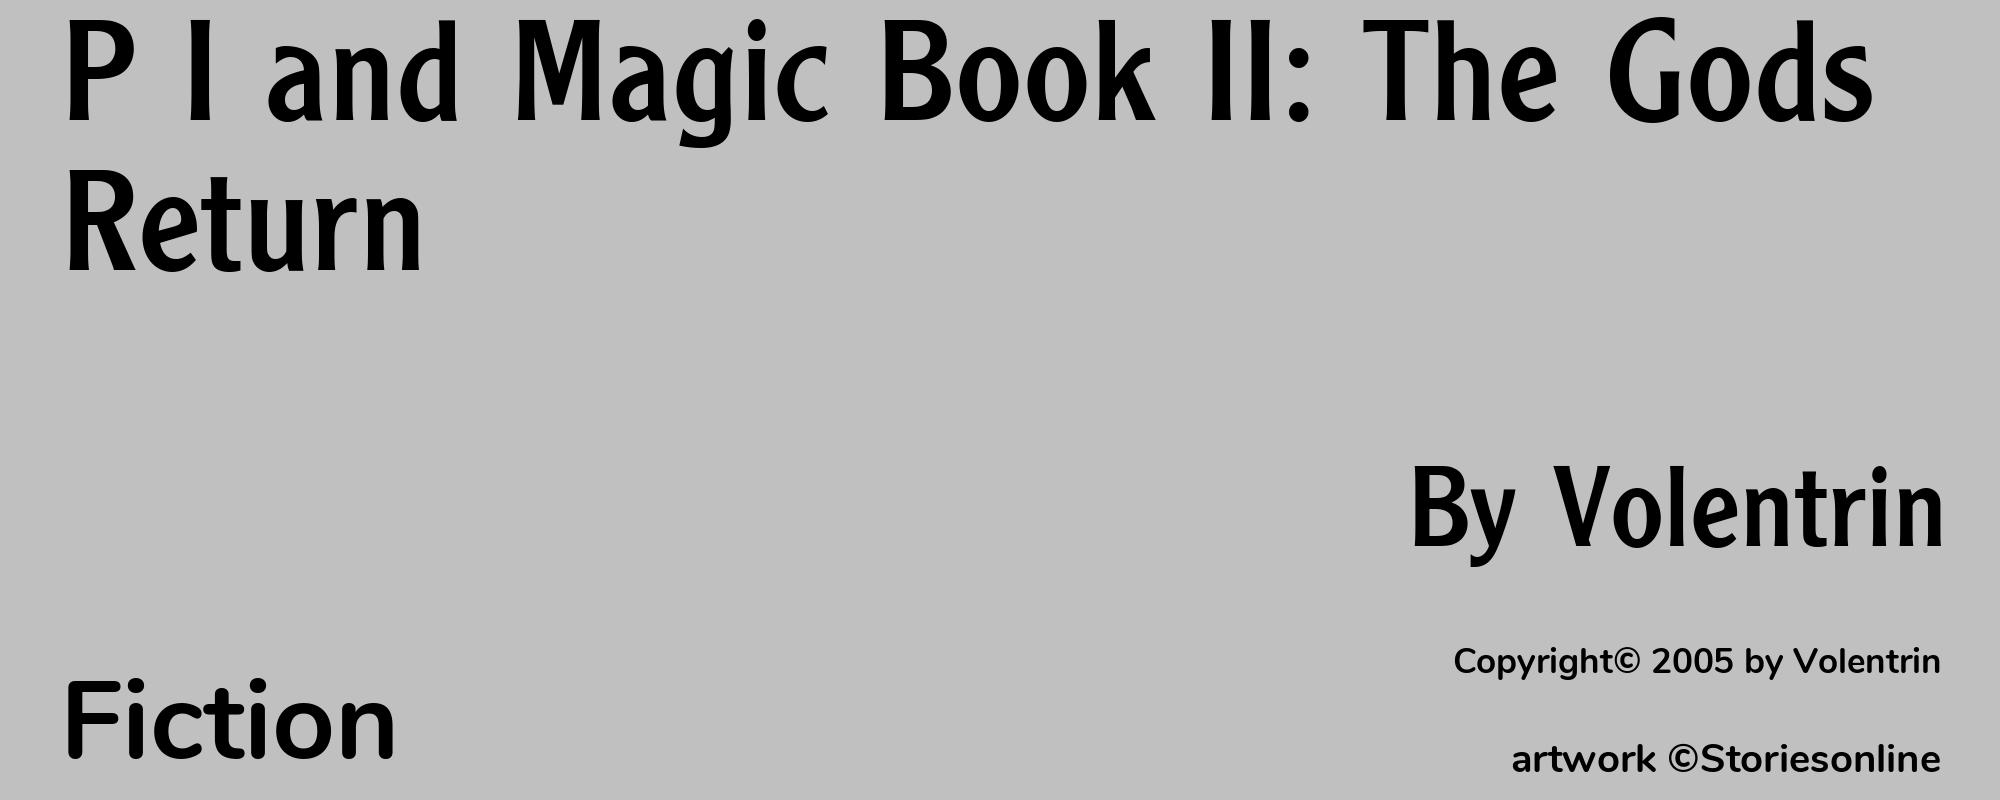 P I and Magic Book II: The Gods Return - Cover